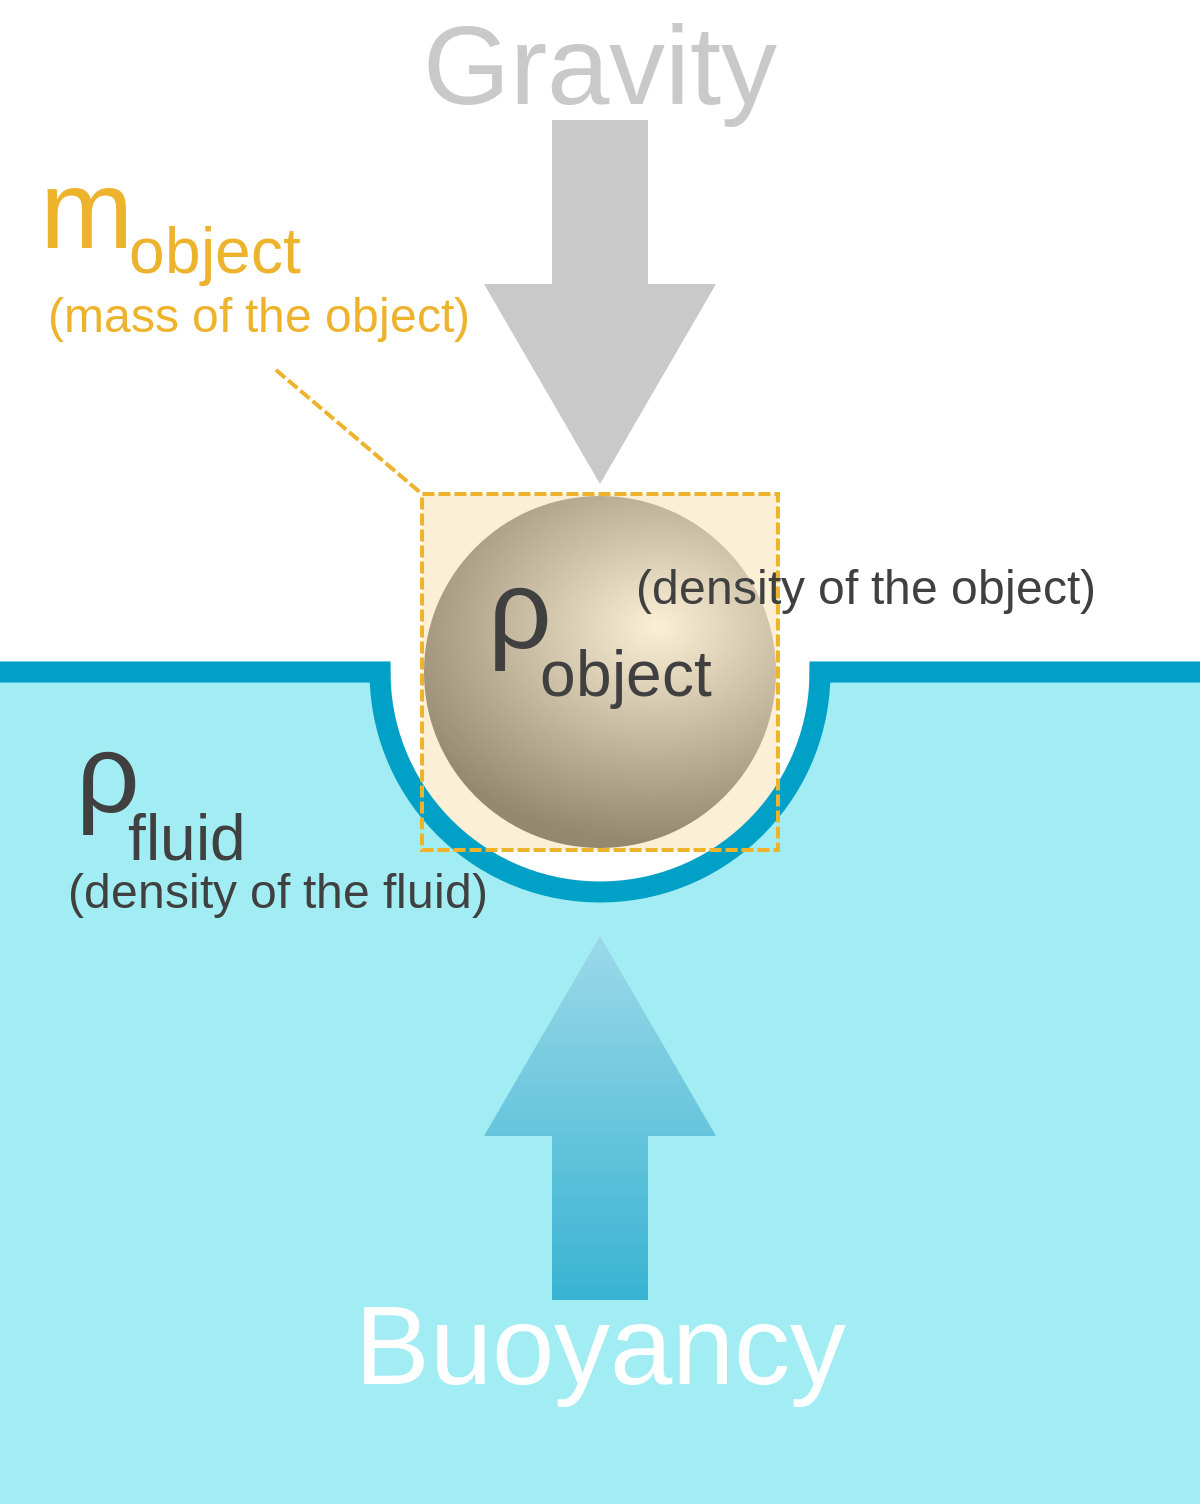 buoyancy - wikipedia